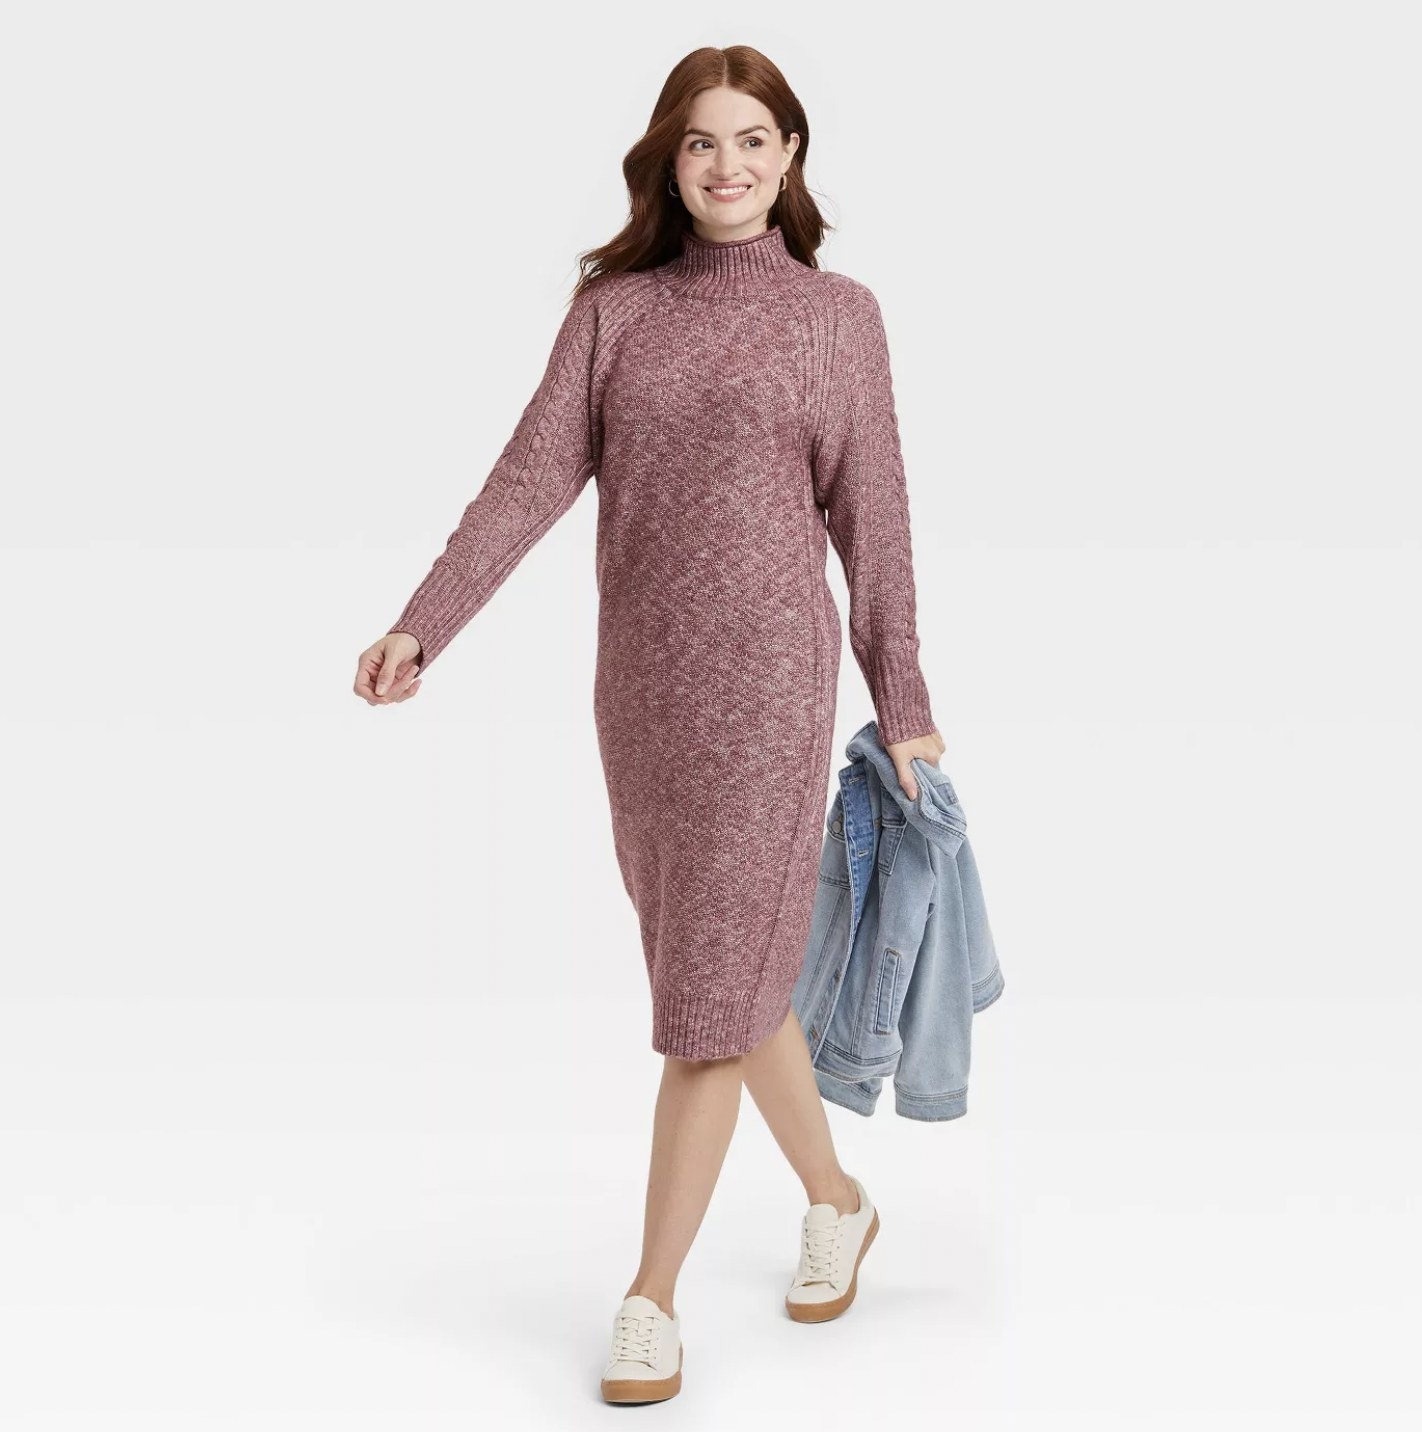 Model wearing the pink knee-length sweater dress